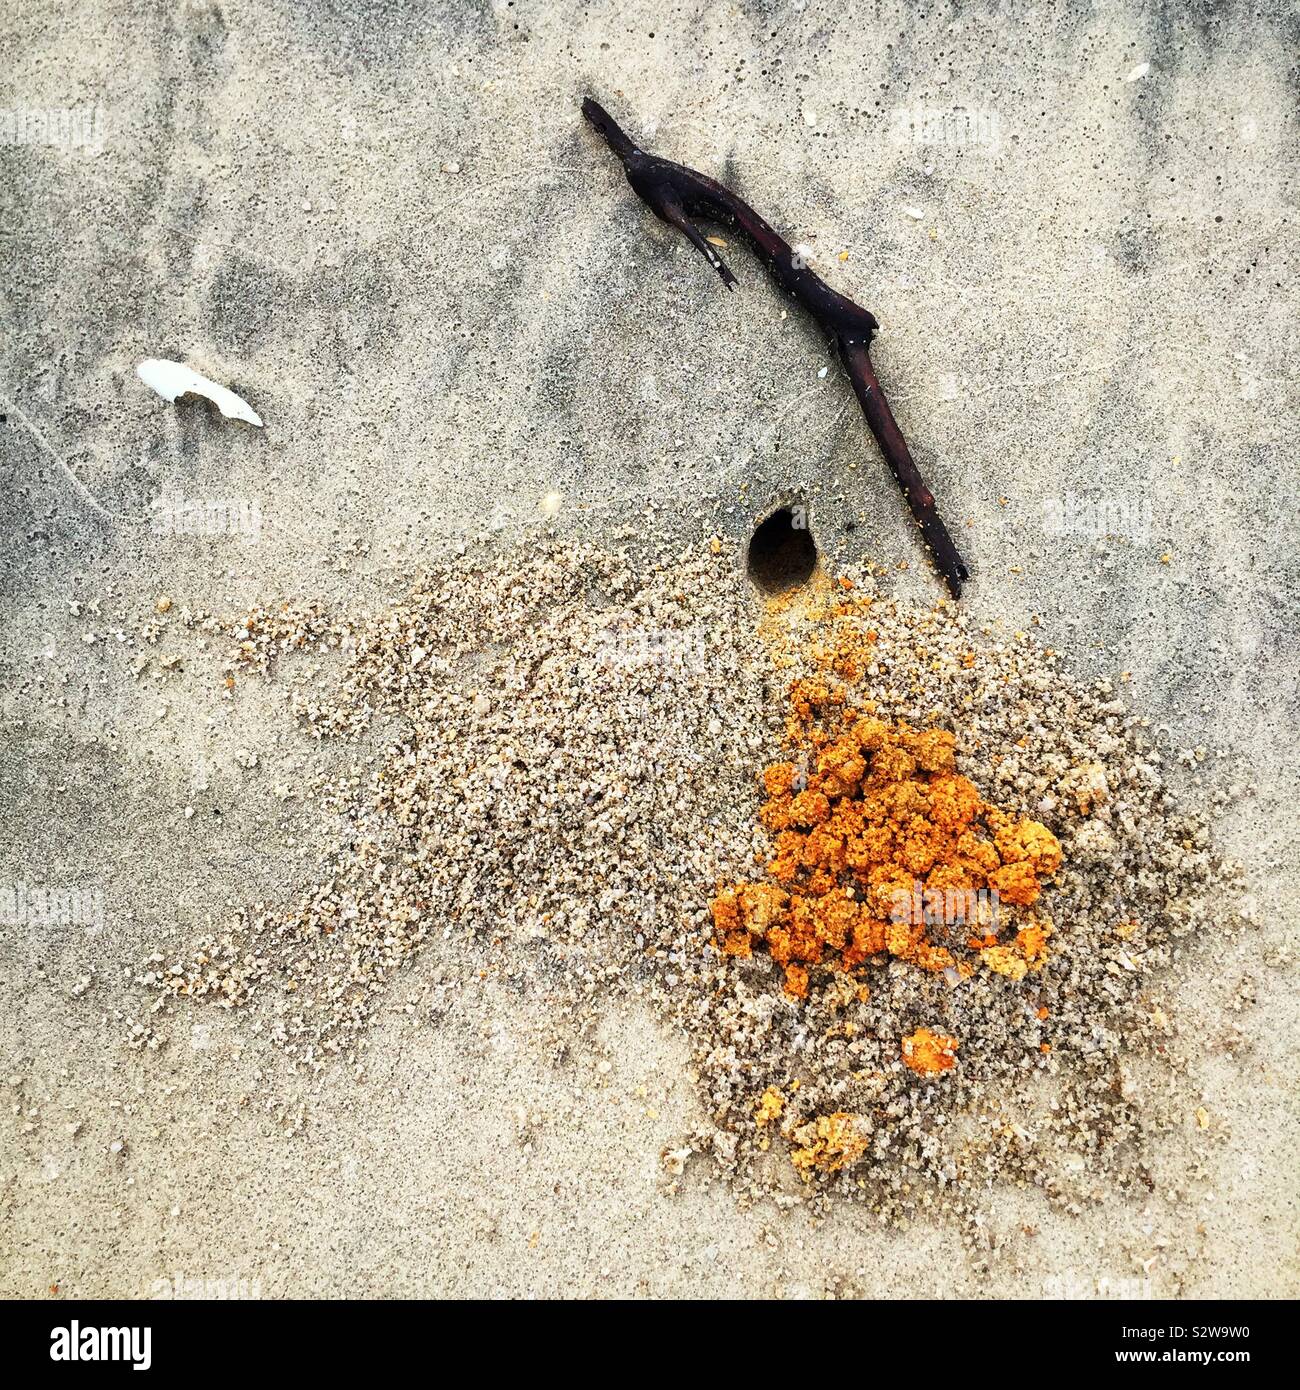 Crab burrow on the beach, Manjung River estuary, near Lumut, Perak, Malaysia Stock Photo